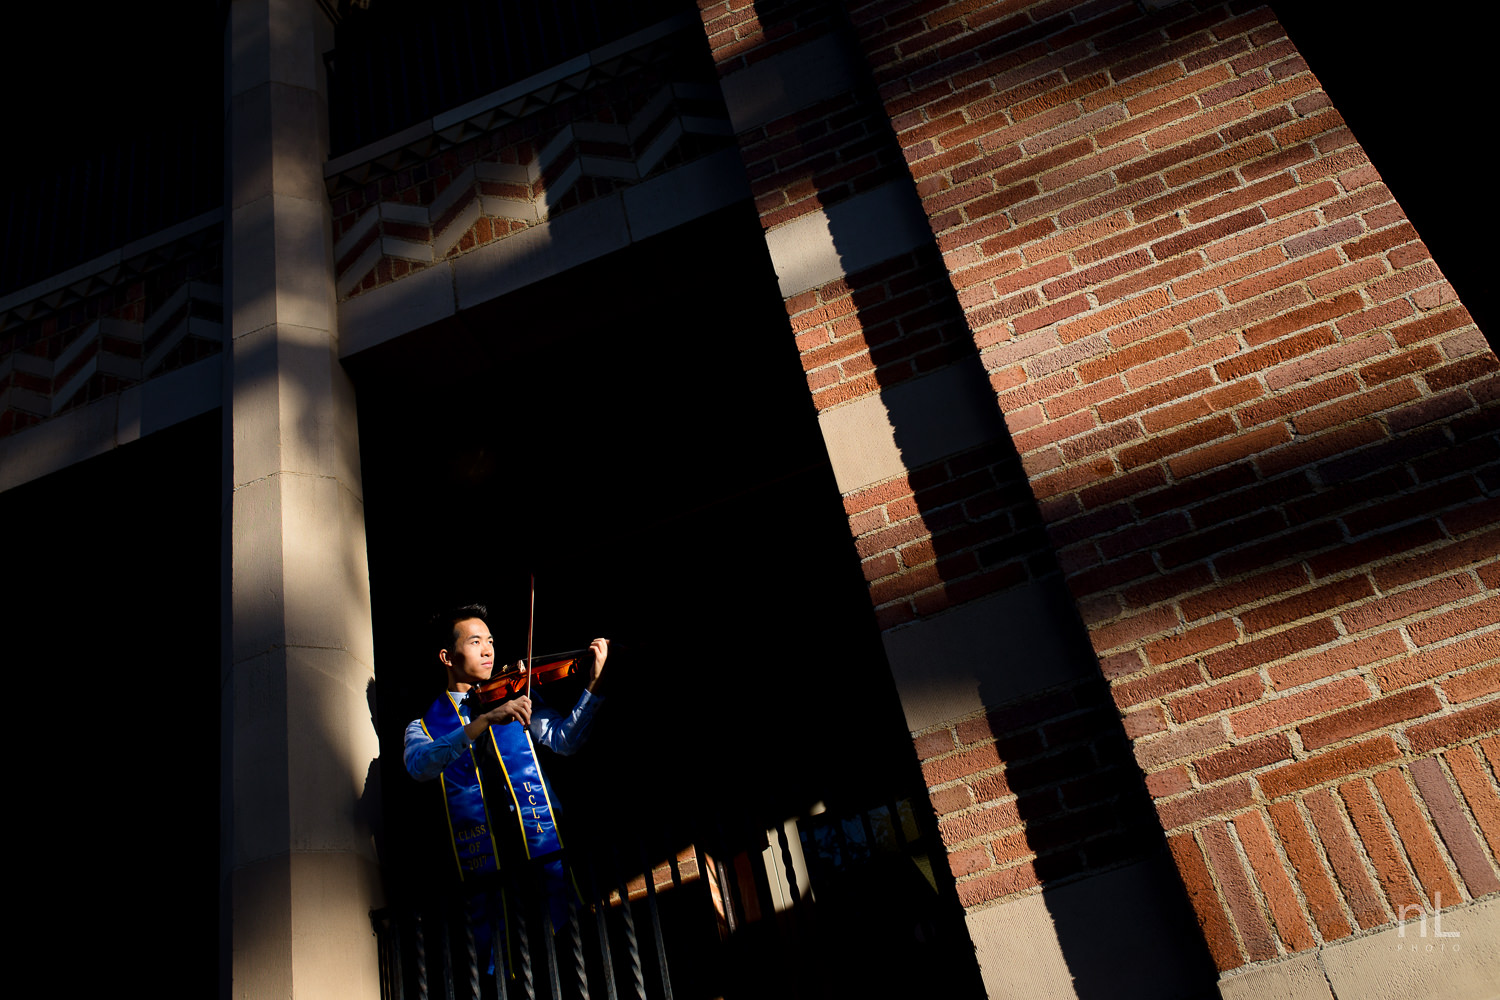 los angeles ucla senior graduation portrait dramatic epic architectural photo of violinist at sunset 